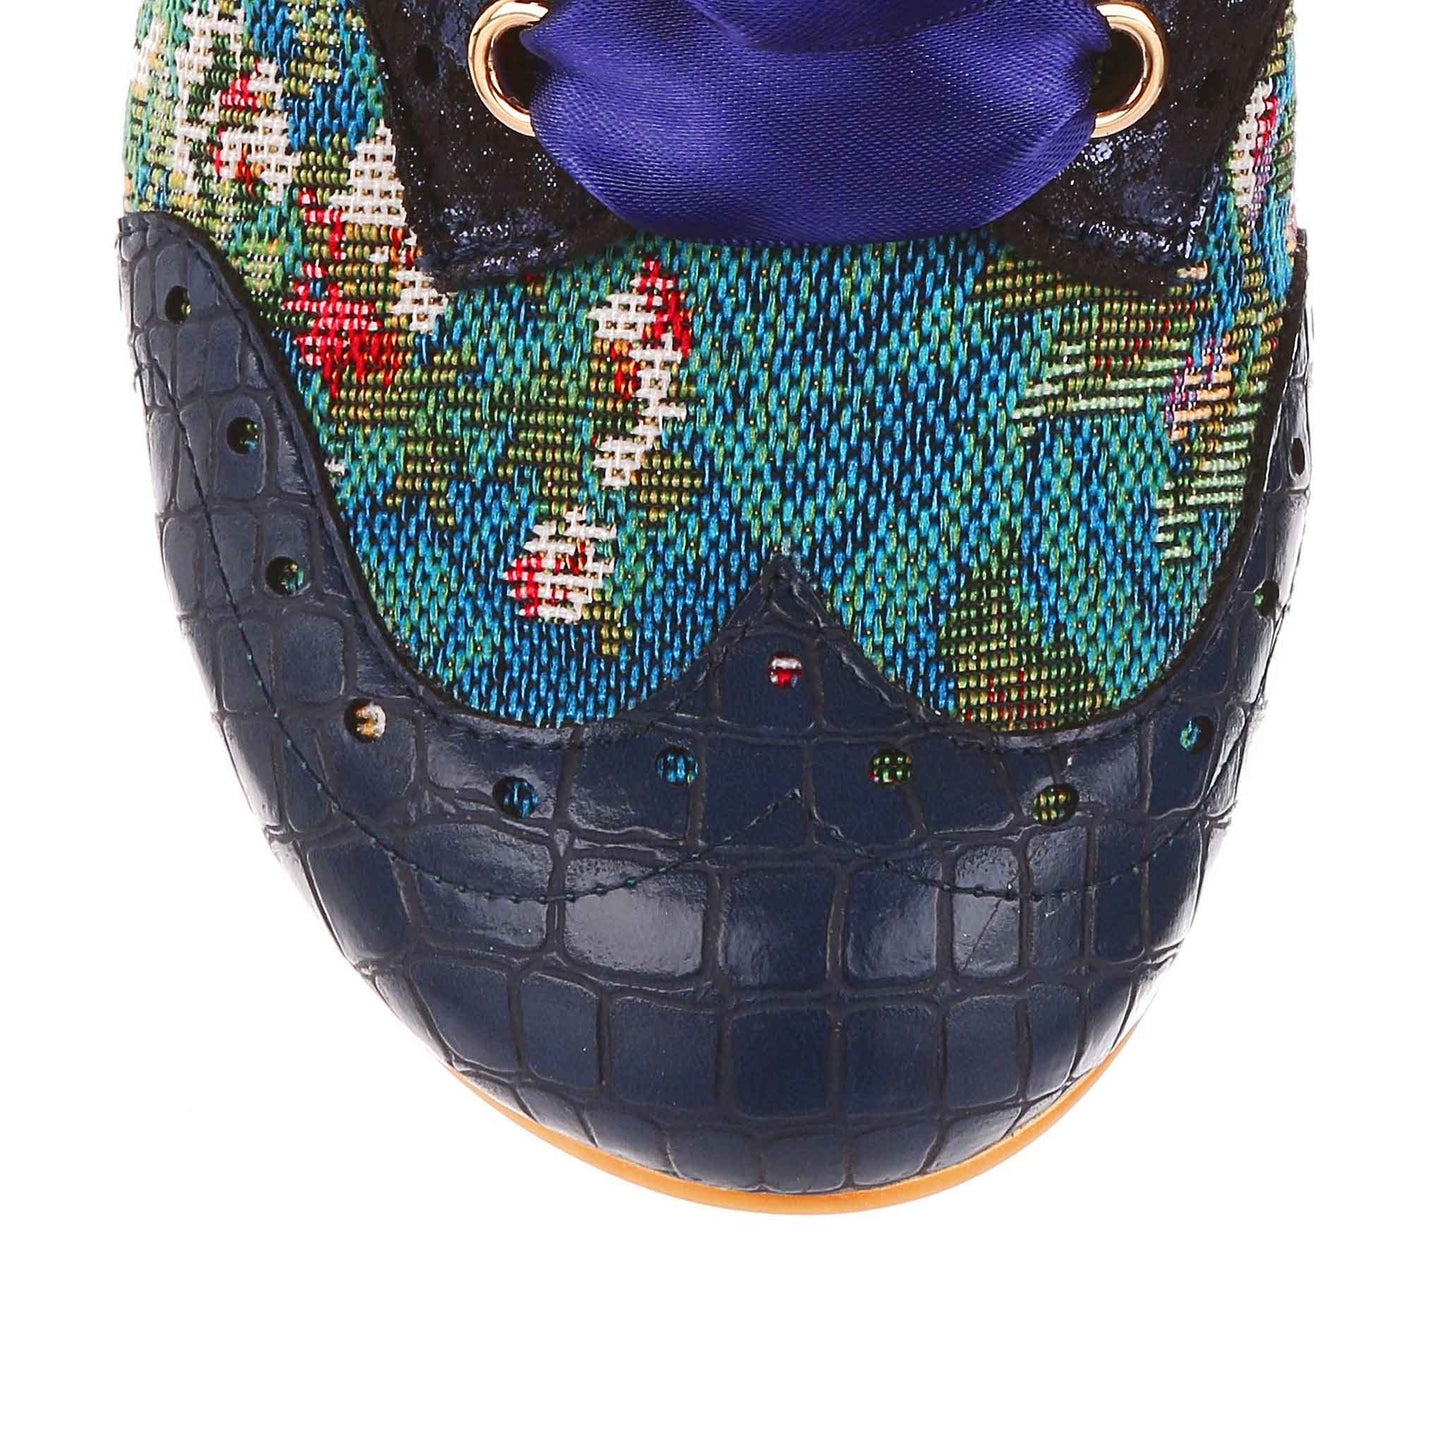 Irregular Choice Women's 4136-82 Cobbles Lace-Up Heel Shoes Blue Floral